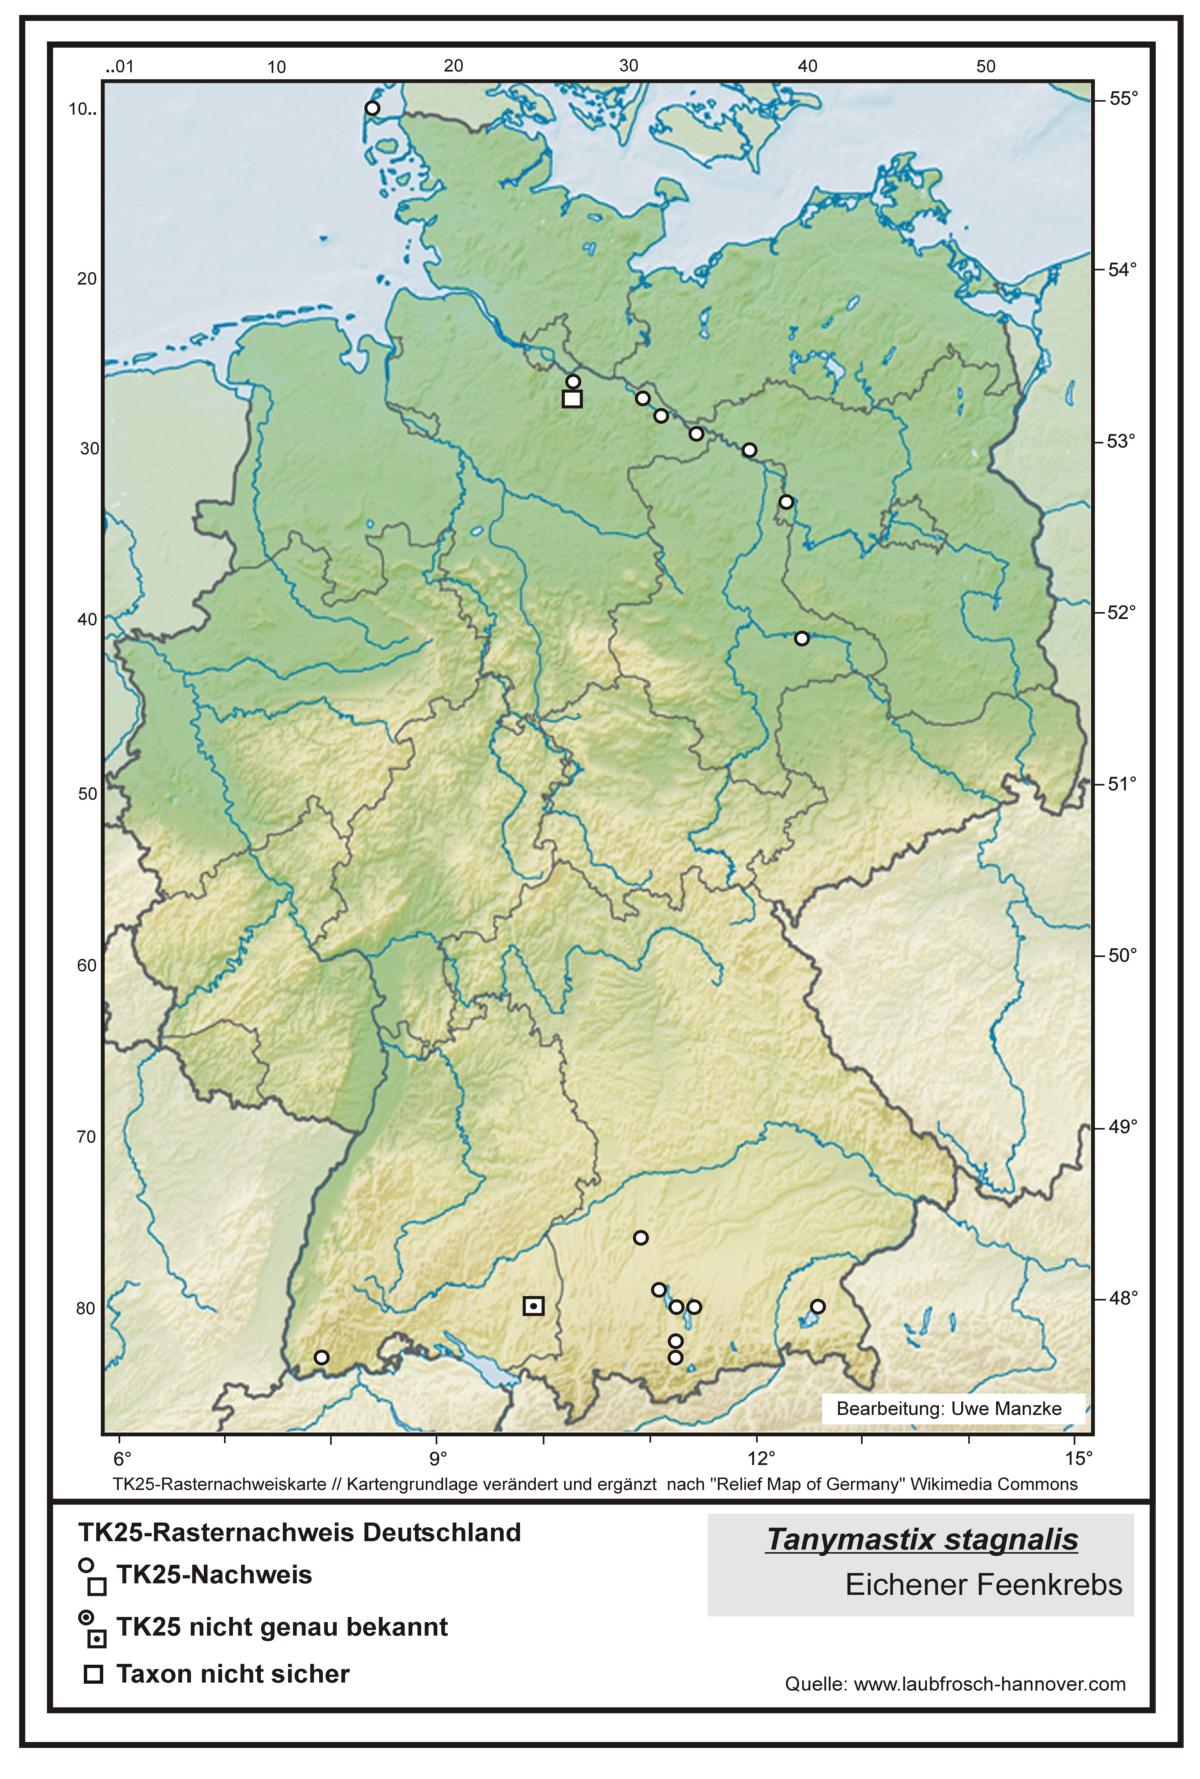 Tanymastix stagnalis TK25-Rasternachweiskarte Deutschland, Bearbeitung Uwe Manzke; Kartengrundlage: verändert n. Relief Map of Germany Wikimedia Commons https://commons.wikimedia.org/wiki/File:Relief_Map_of_Germany.svg